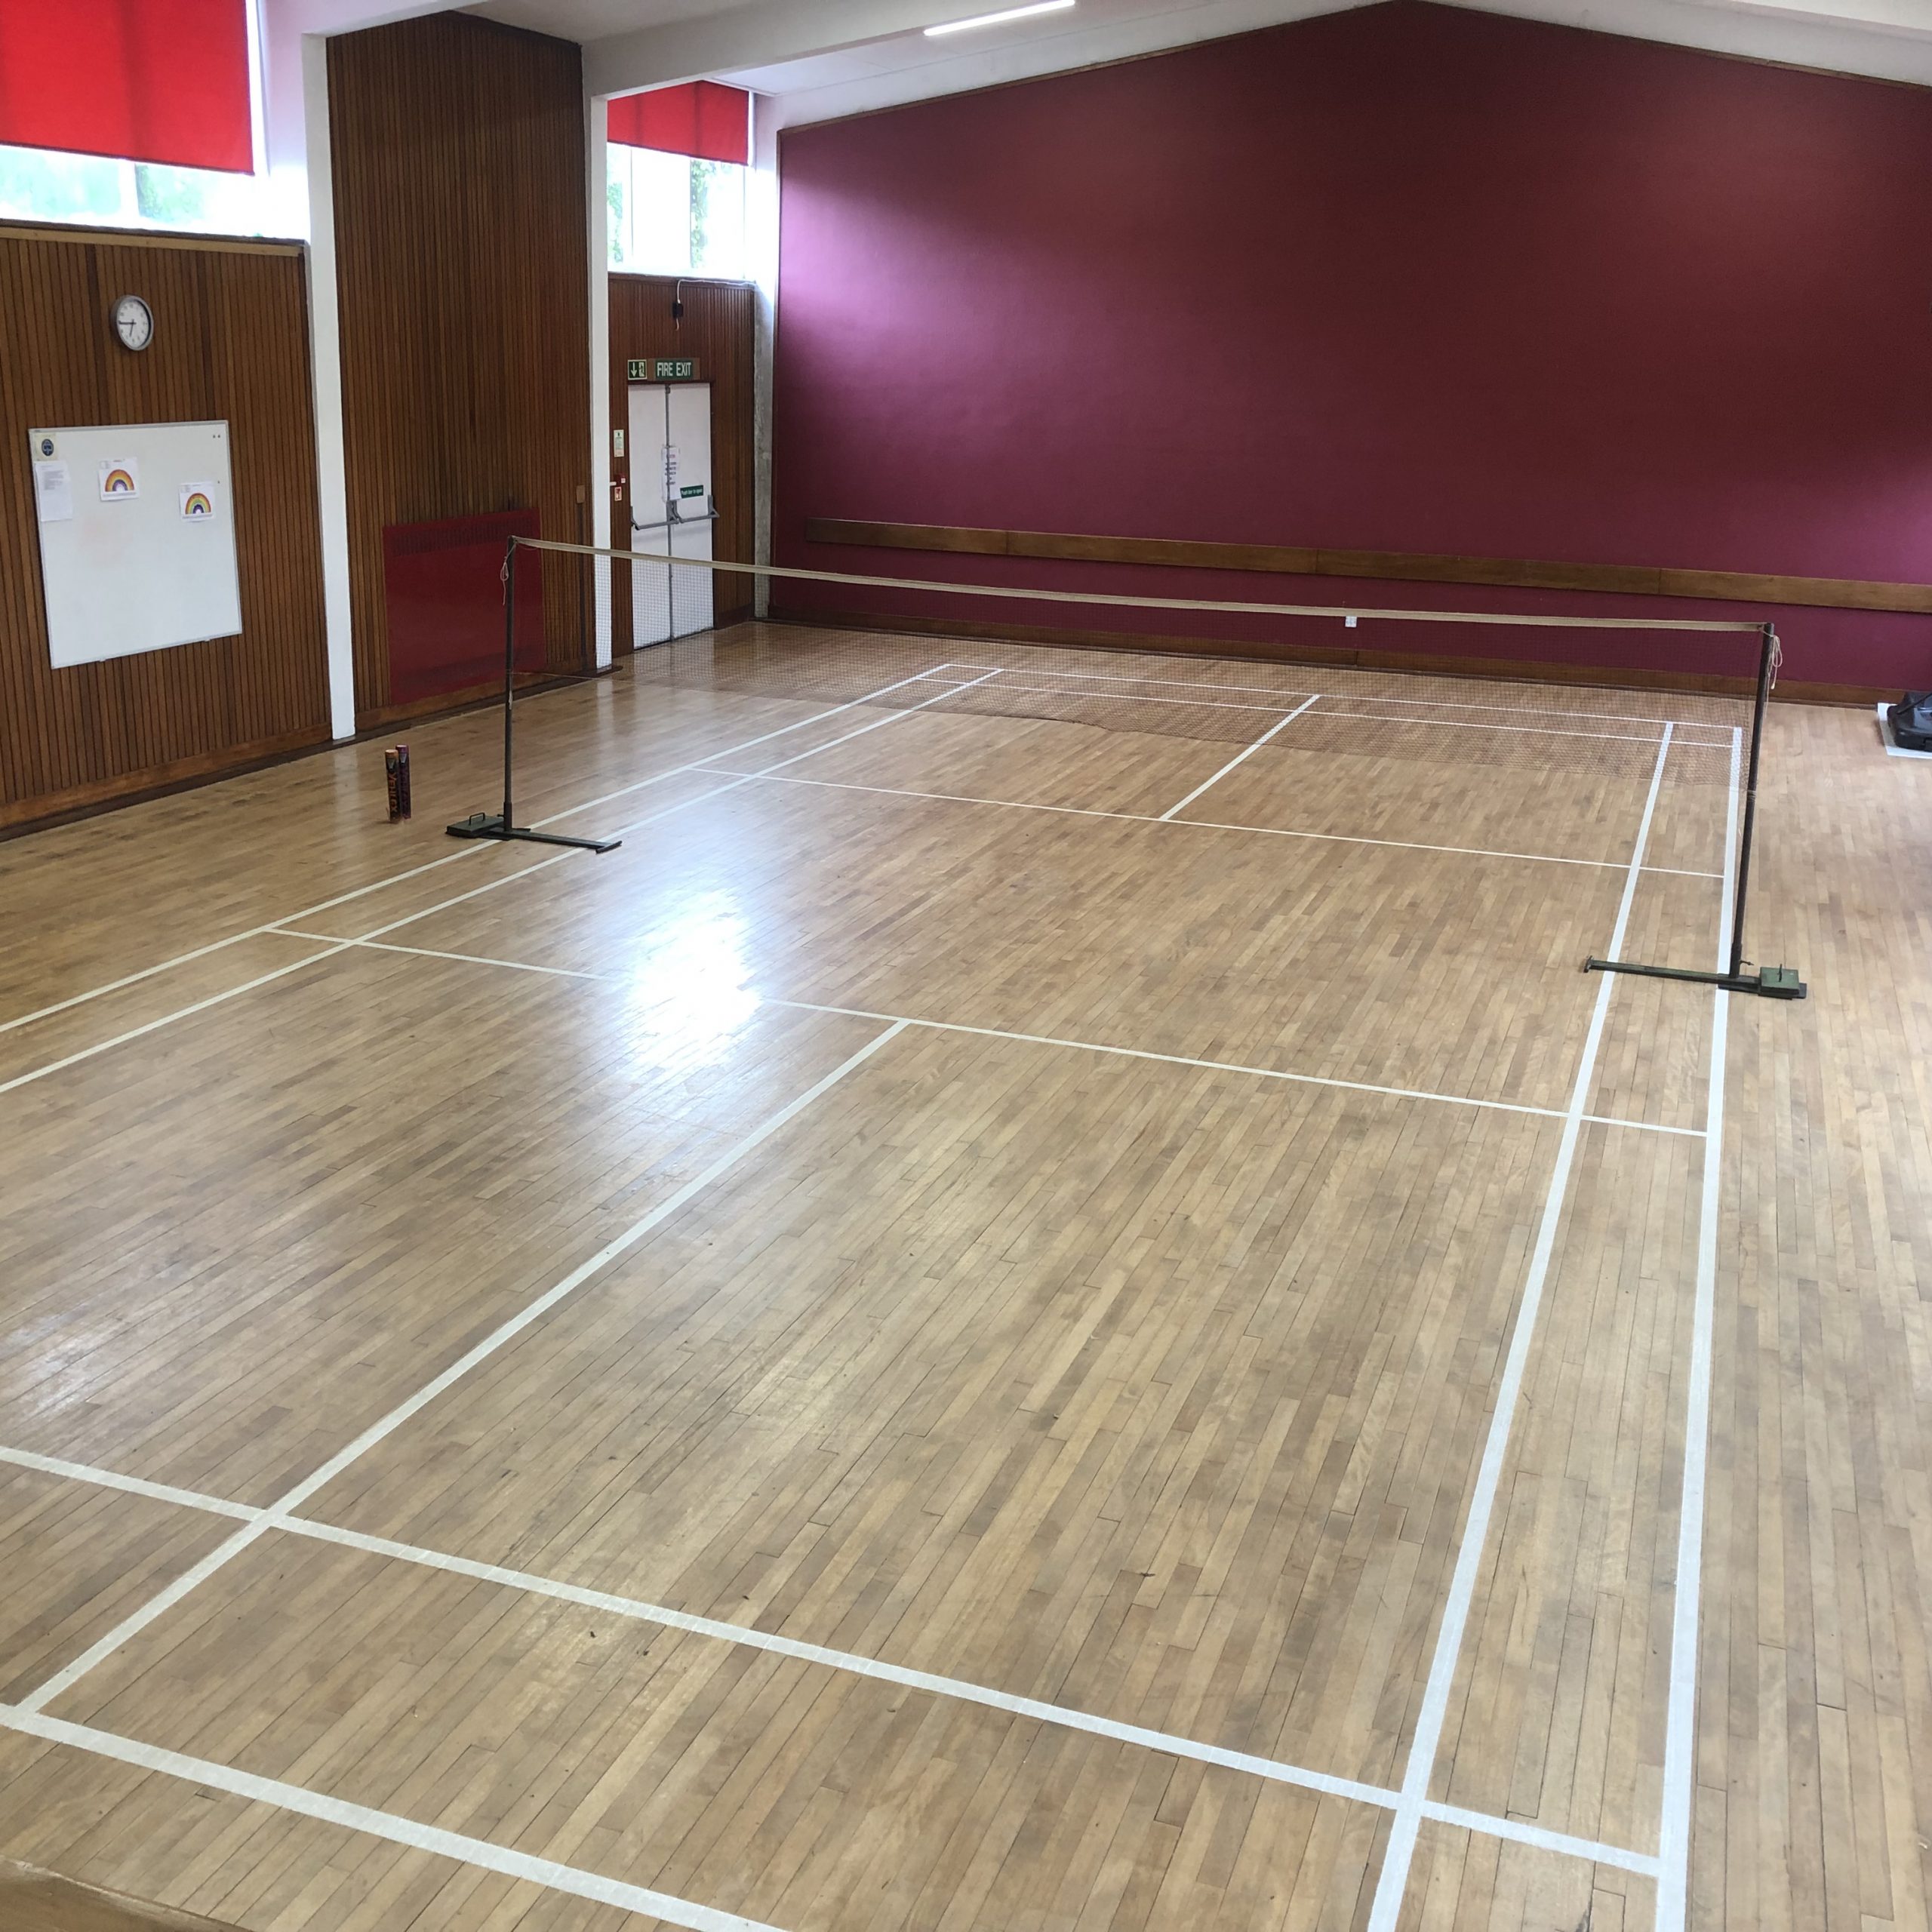 Badminton returns to Langside for 2021/22